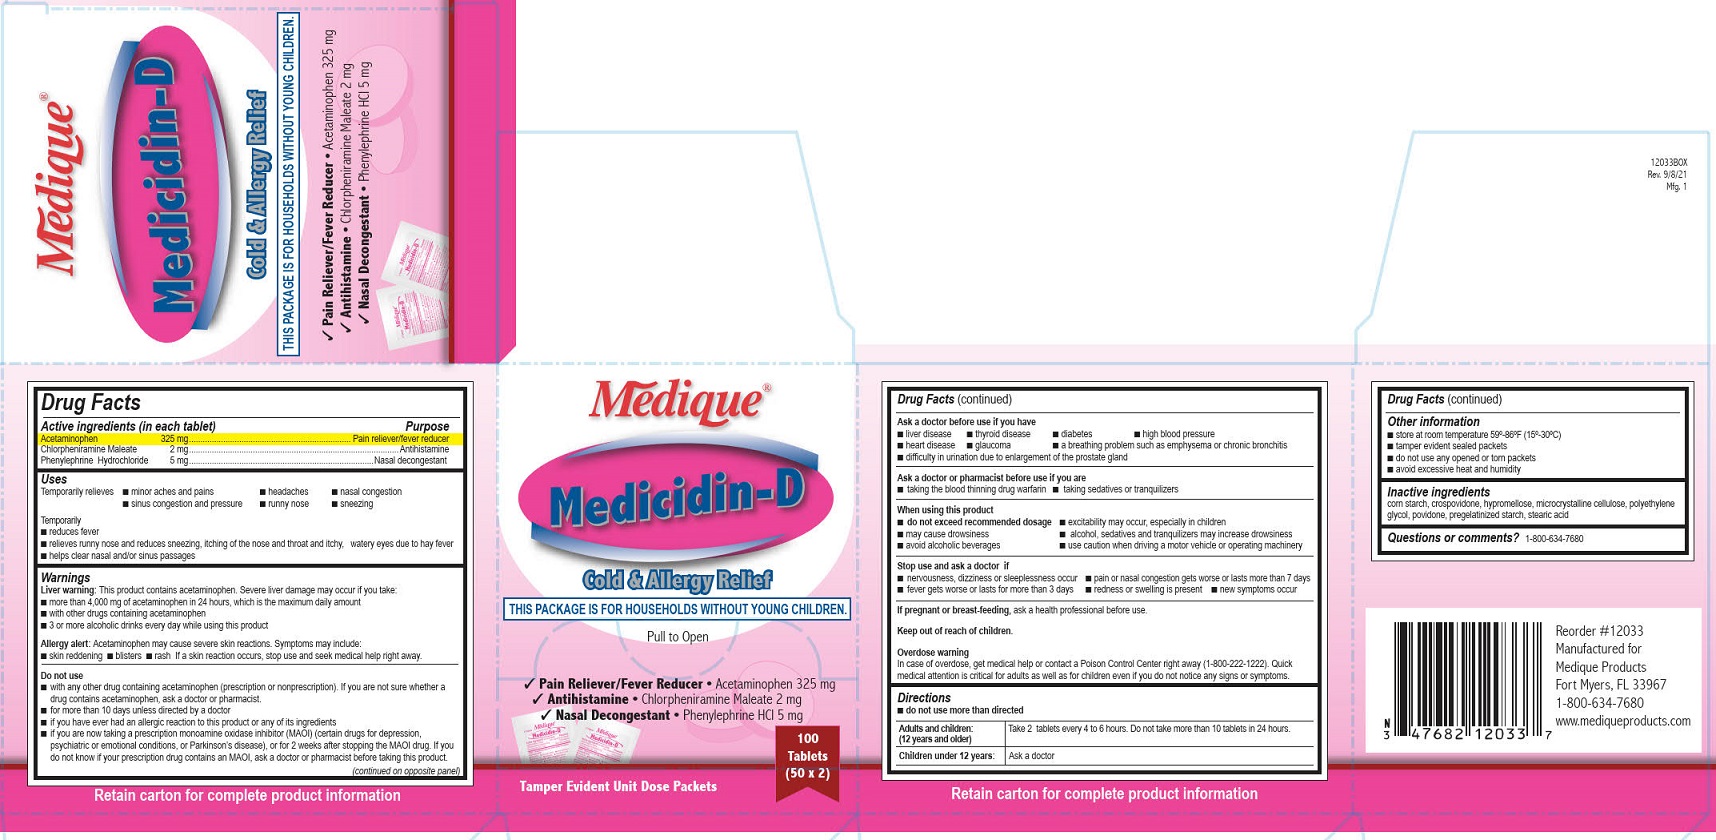 Medique